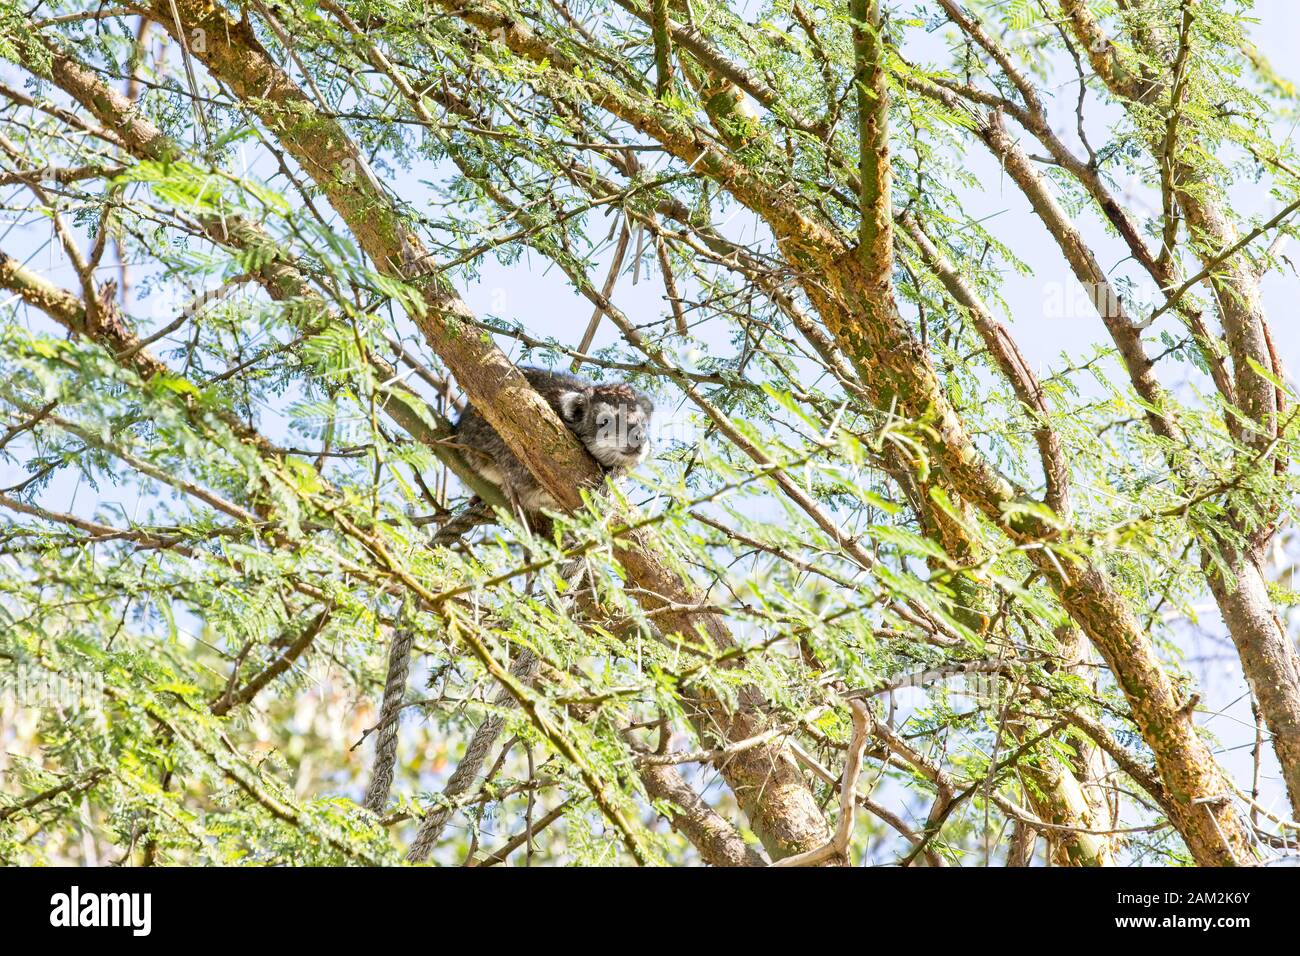 Southern Tree Hyrax (Dendrohyrax arboreus), in a tree near Ilkeliani Camp, Maasai Mara, Kenya. Stock Photo